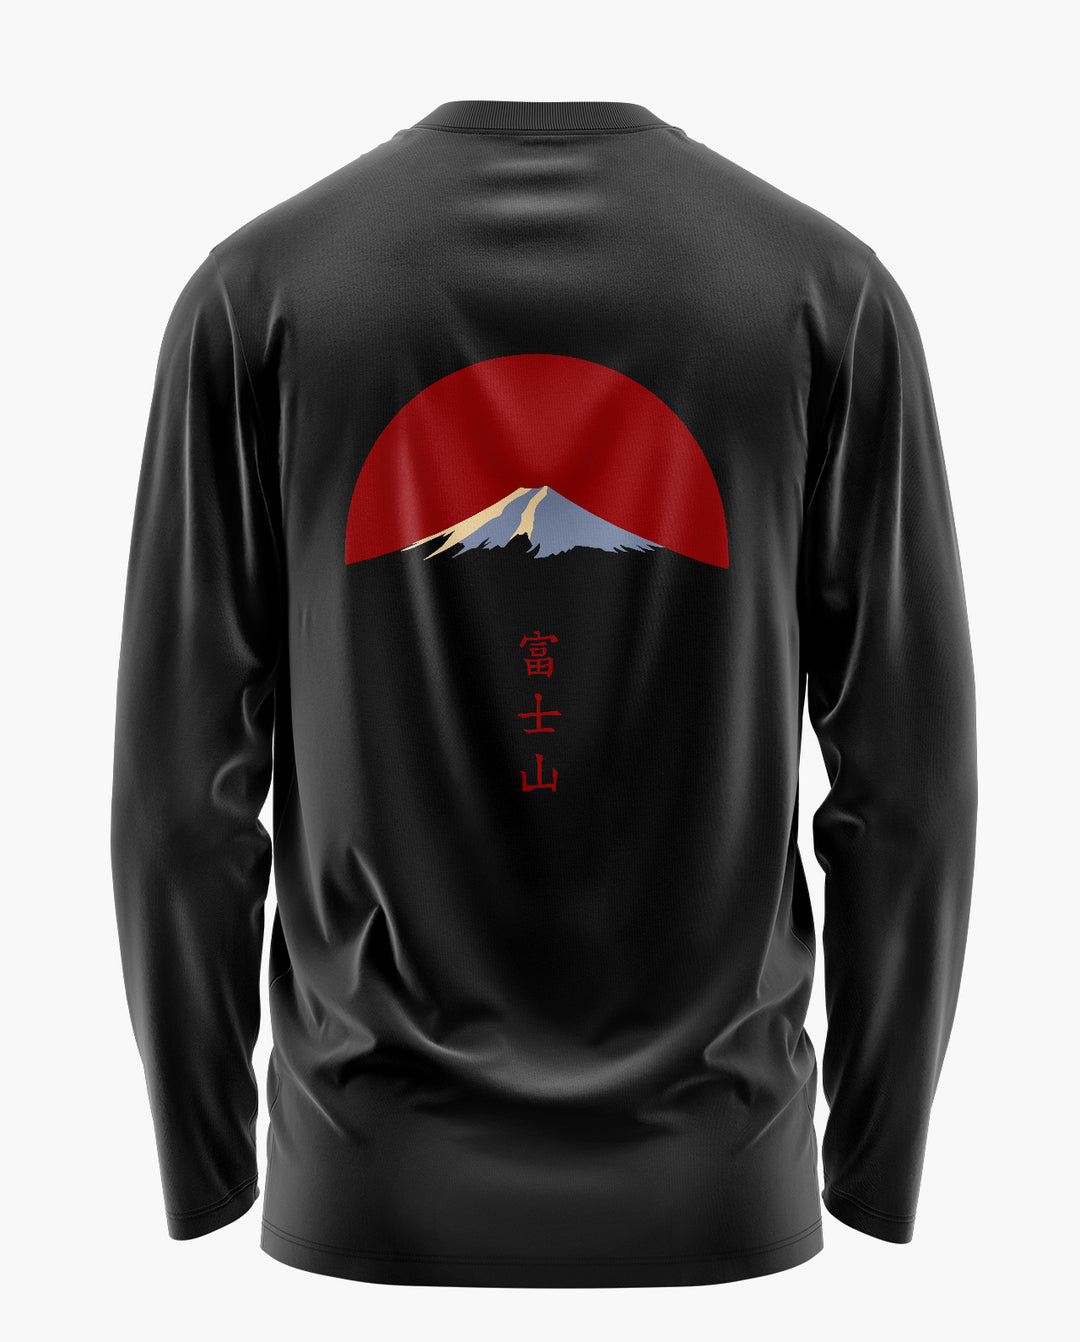 FUJI MOUNTAIN Full Sleeve T-Shirt